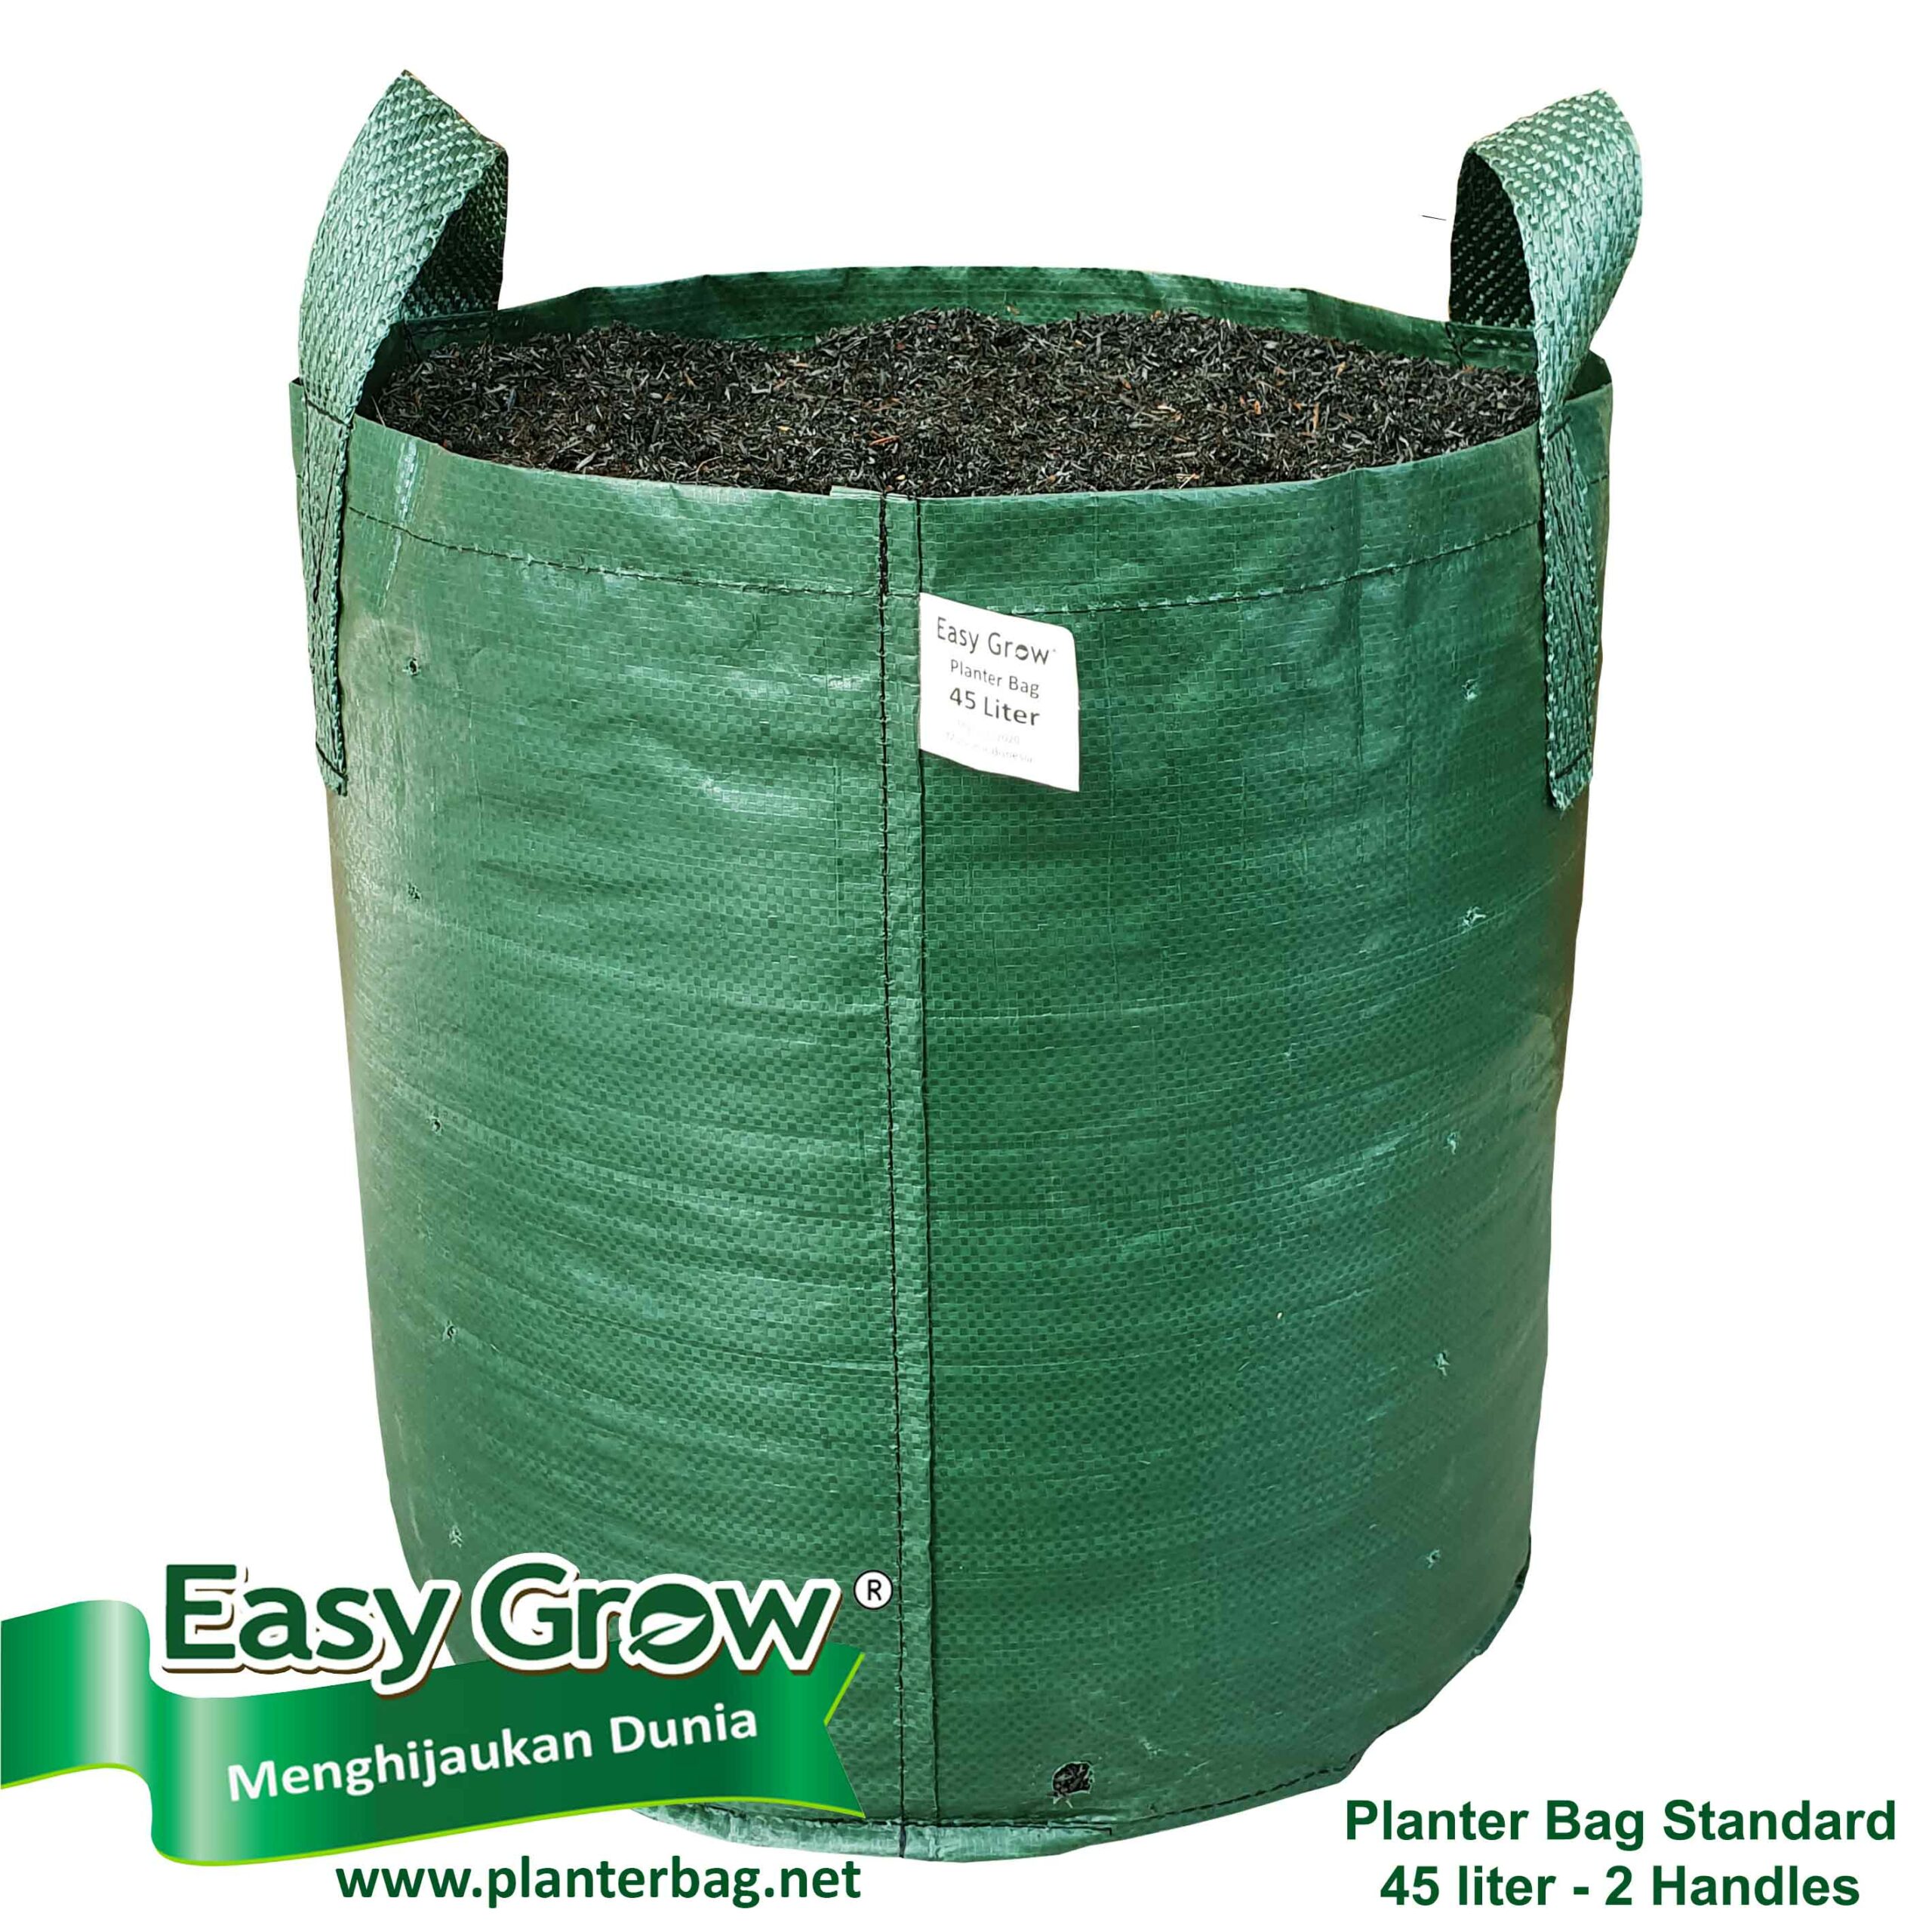 https://pbr.planterbag.net/wp-content/uploads/2018/09/Easy-Grow-Planterbag-standard_2-Hanldes-scaled.jpg